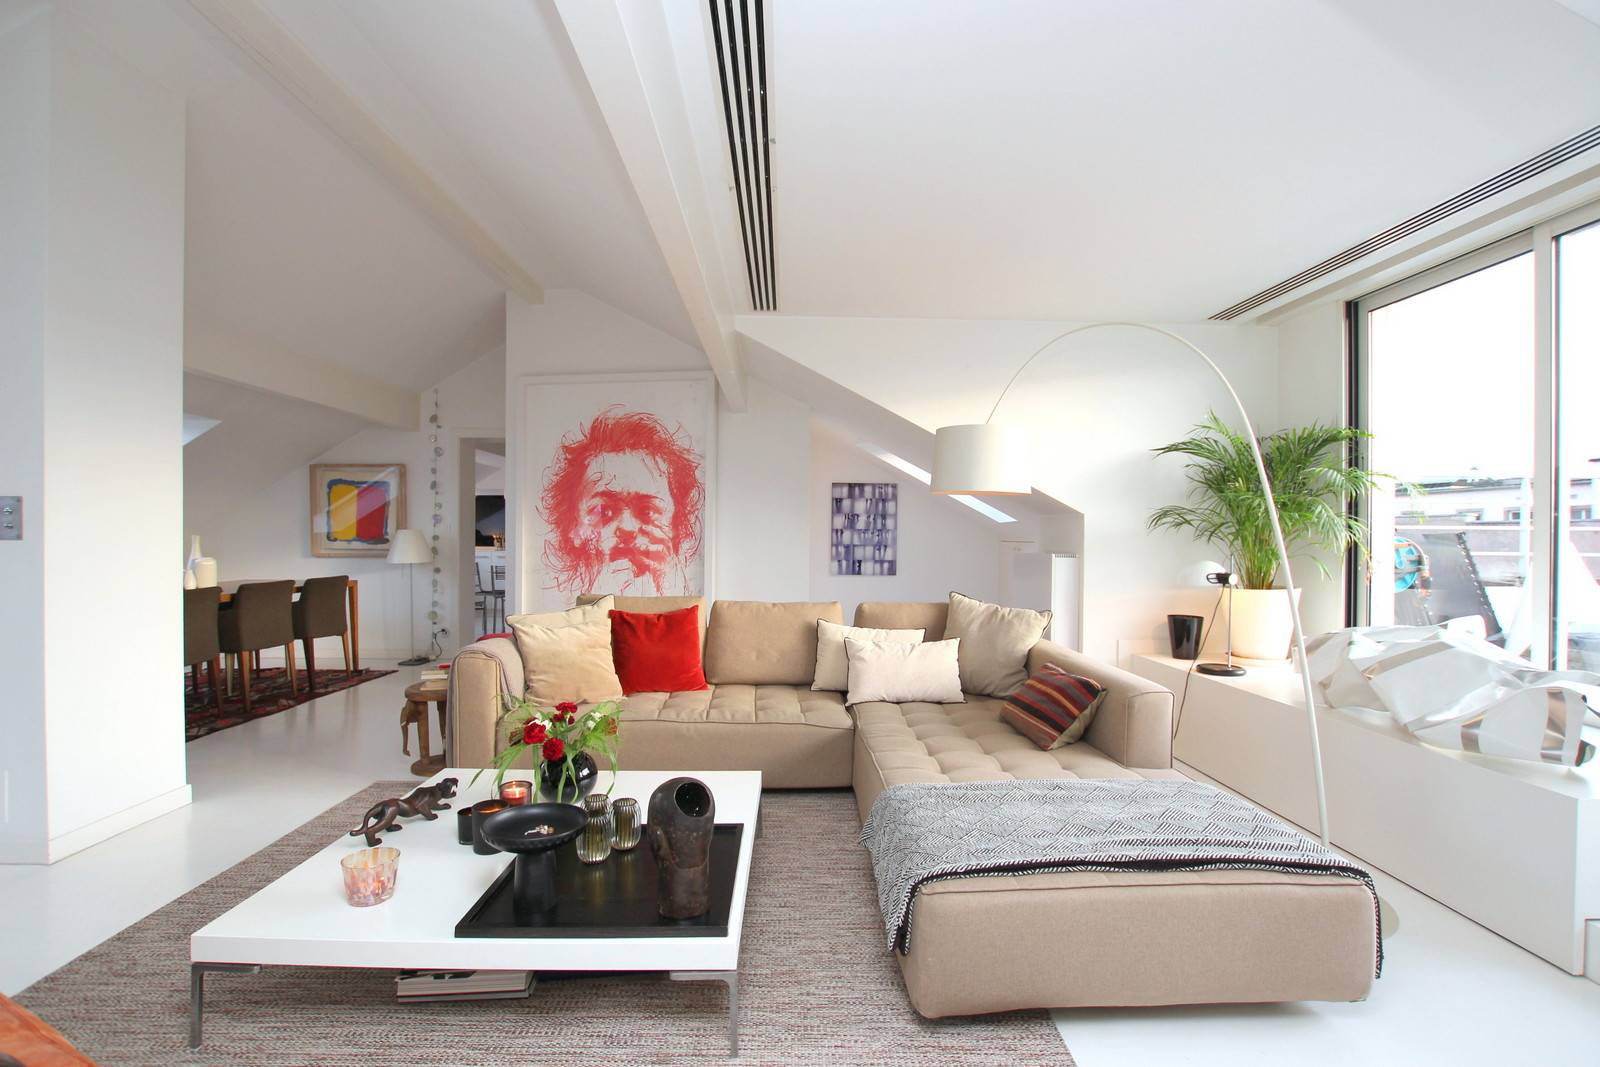 VENDU - EXCLUSIVITE NEUSTADT - superbe appartement 7 pièces 183 m² - terrasse 24 m² - stationnement